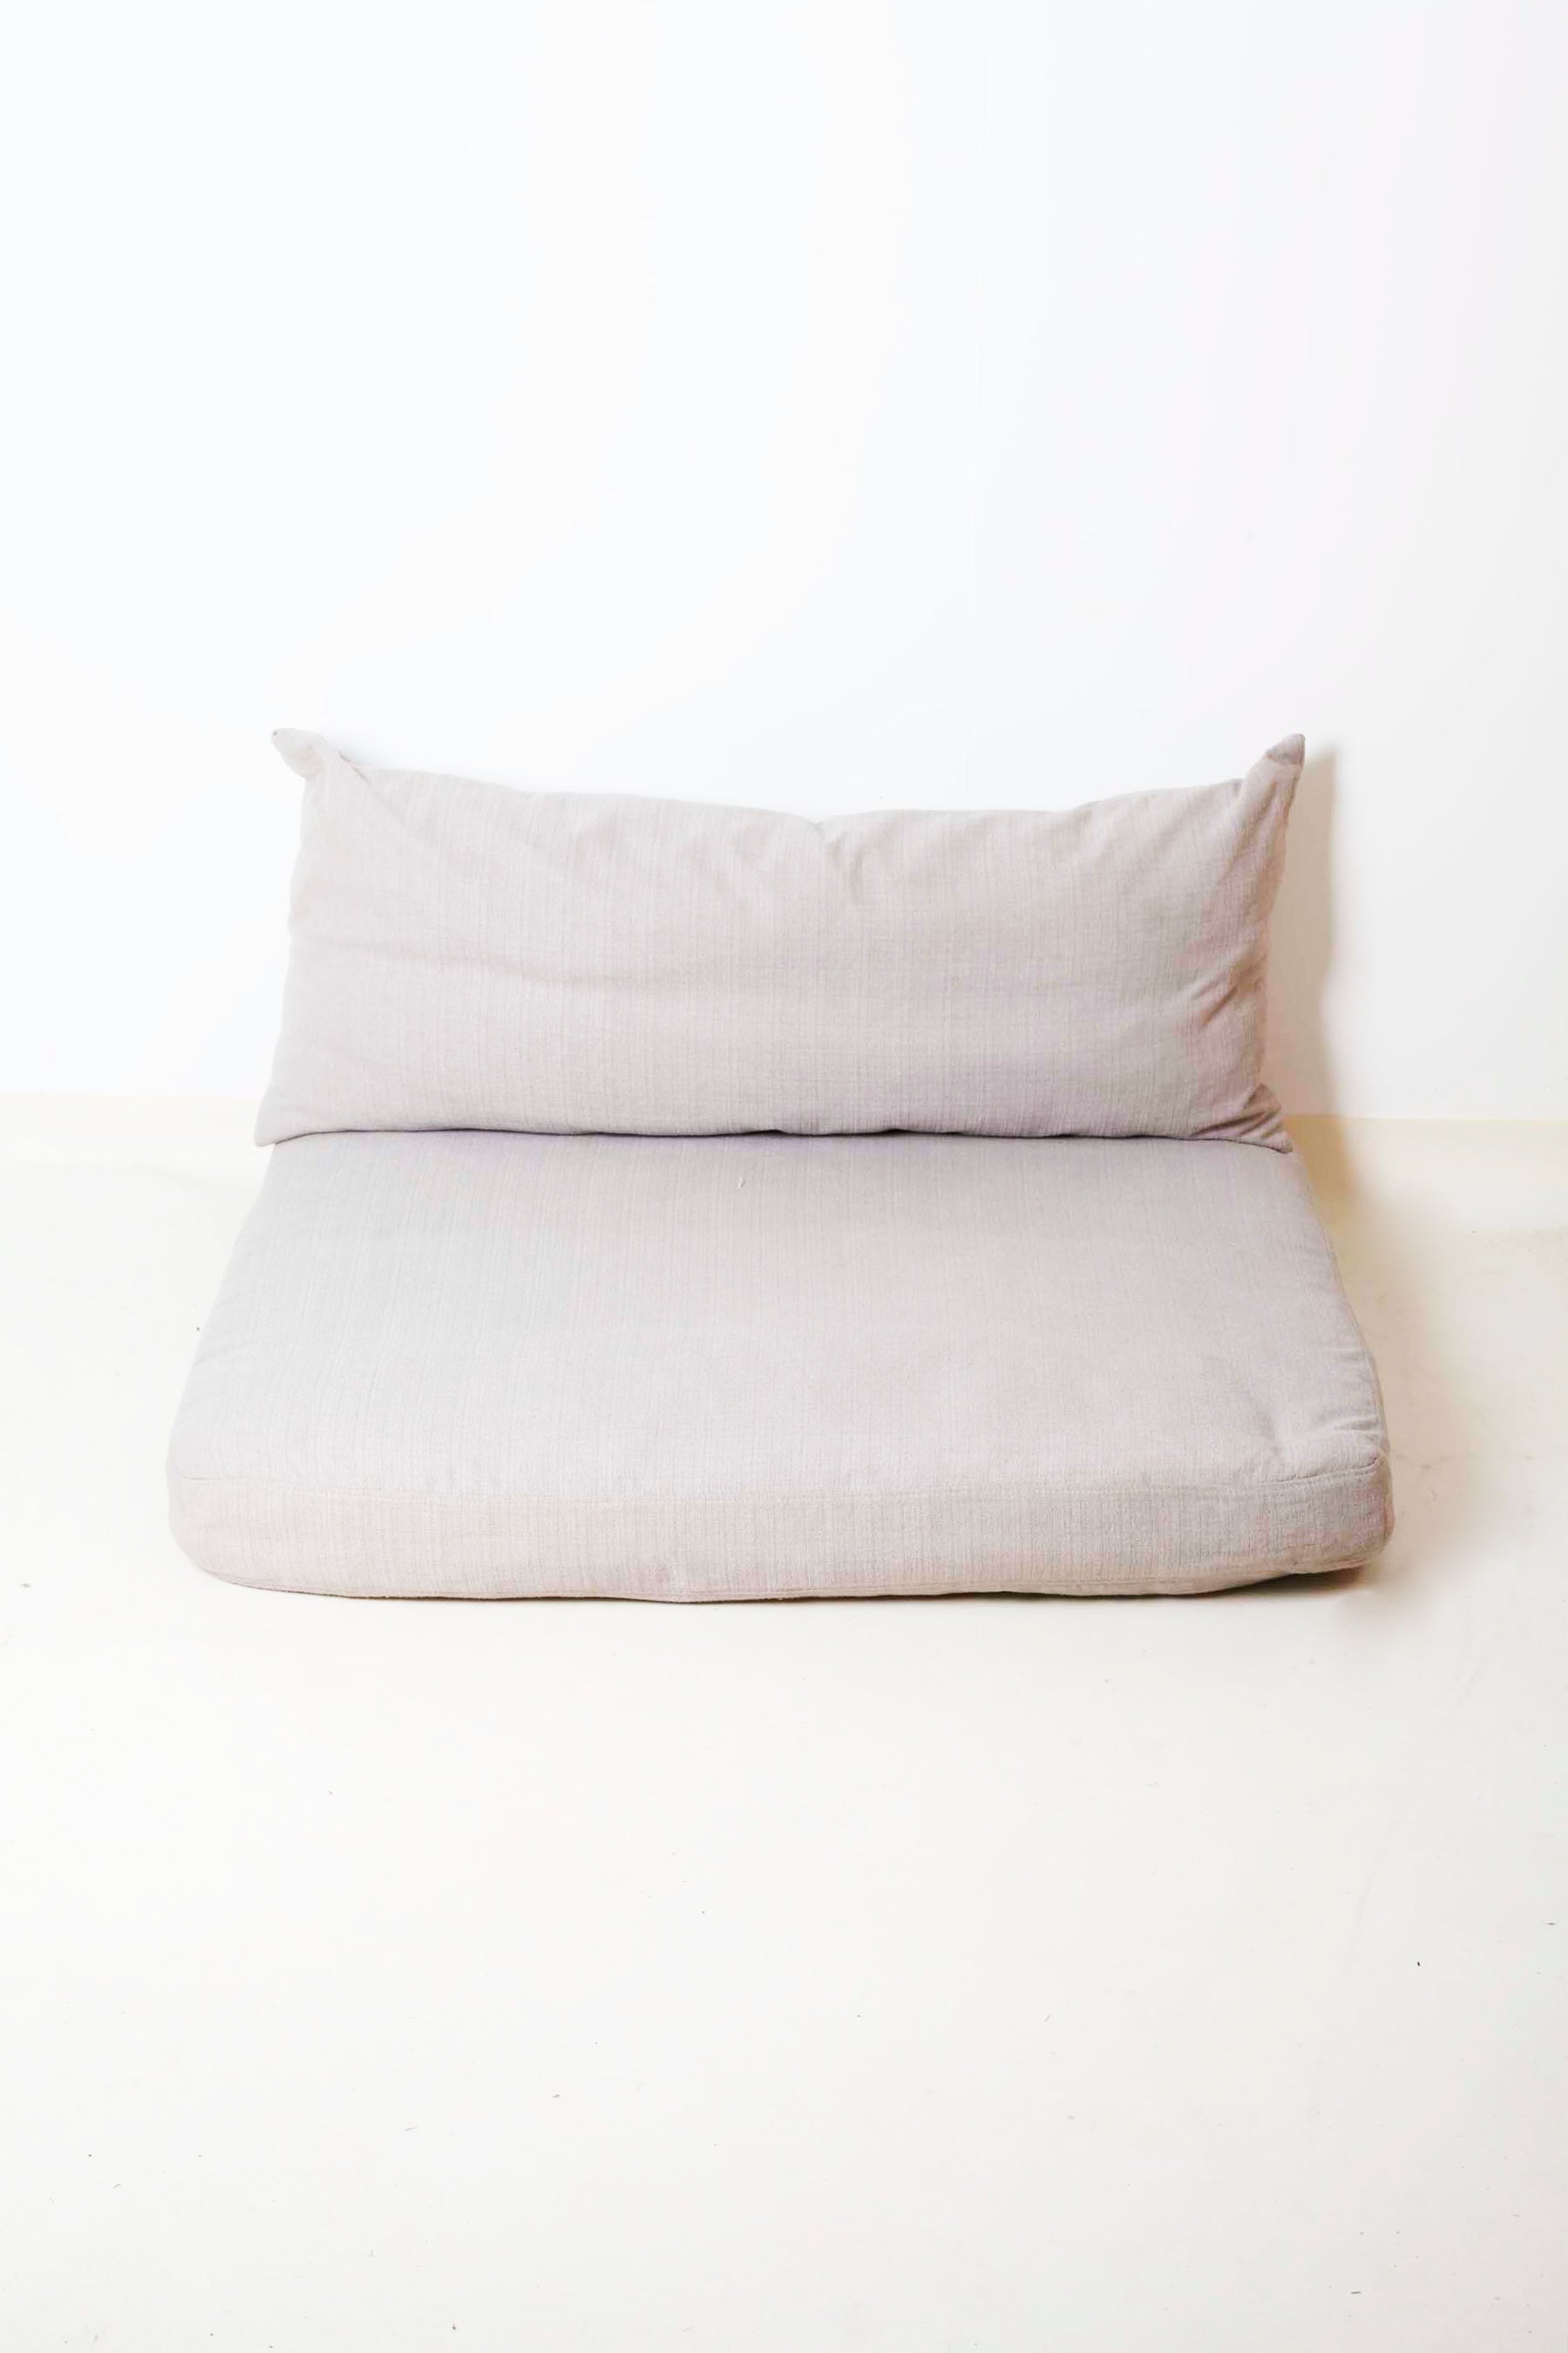 Large Floor Cushions in Grey